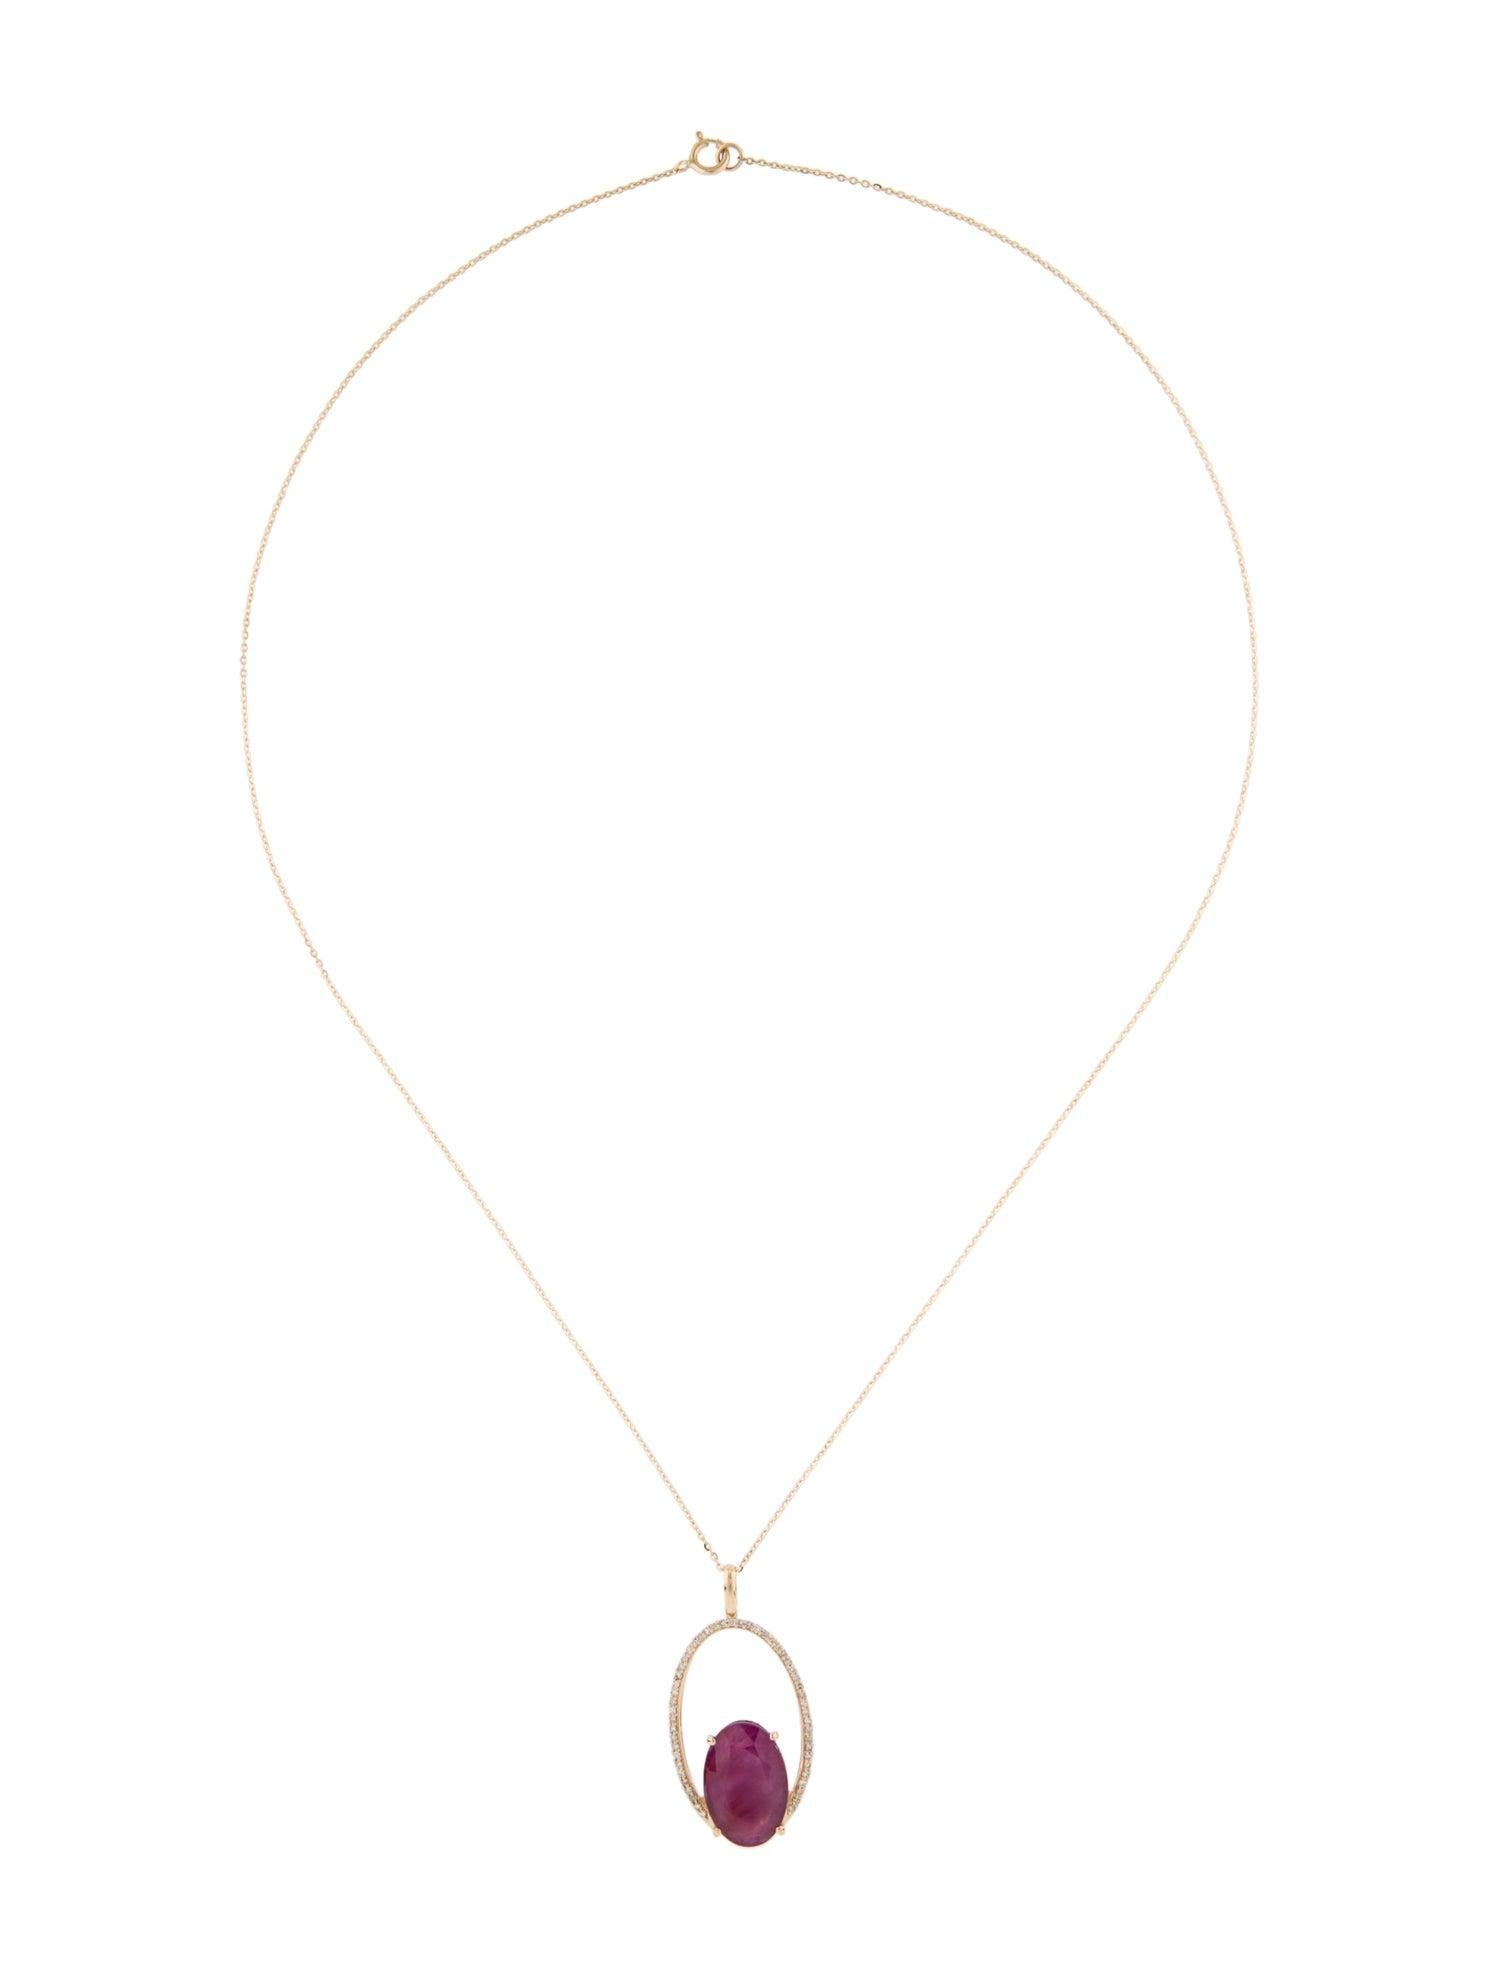 Women's 14K 6.42ct Ruby & Diamond Pendant Necklace: Timeless Luxury Statement Jewelry For Sale